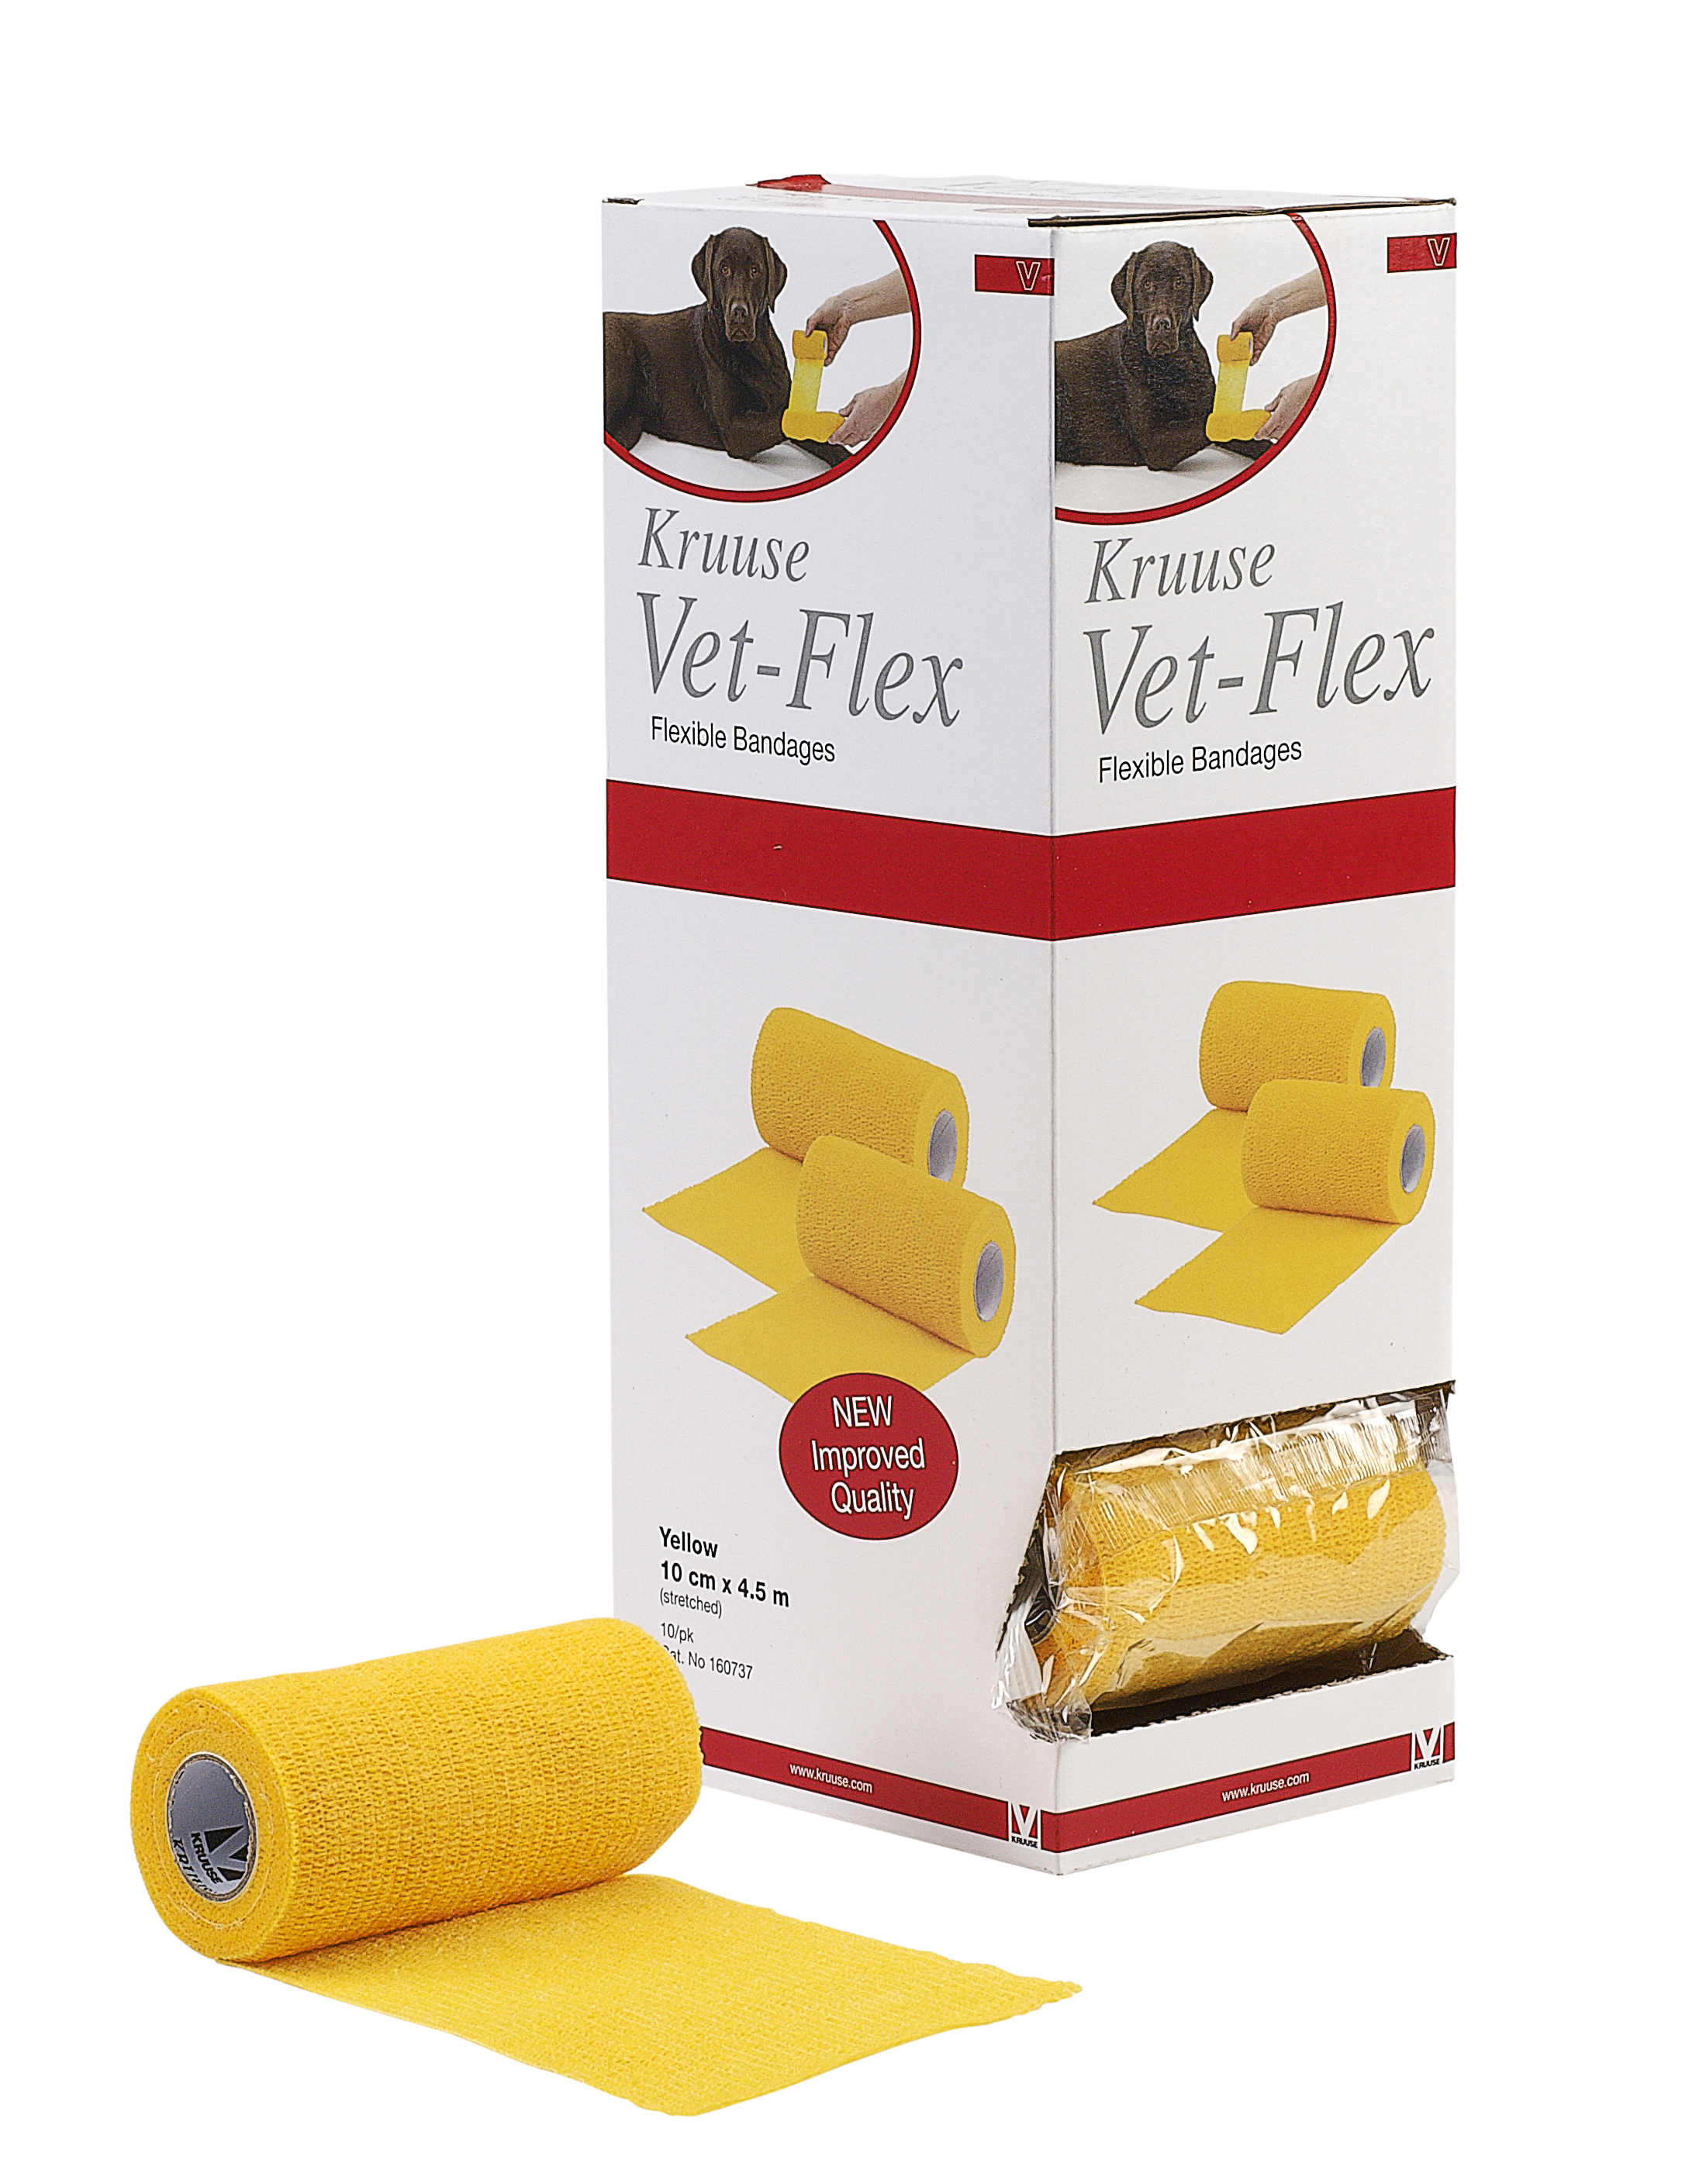 Vet-Flex 10 cm x 4.5 m, κίτρινο